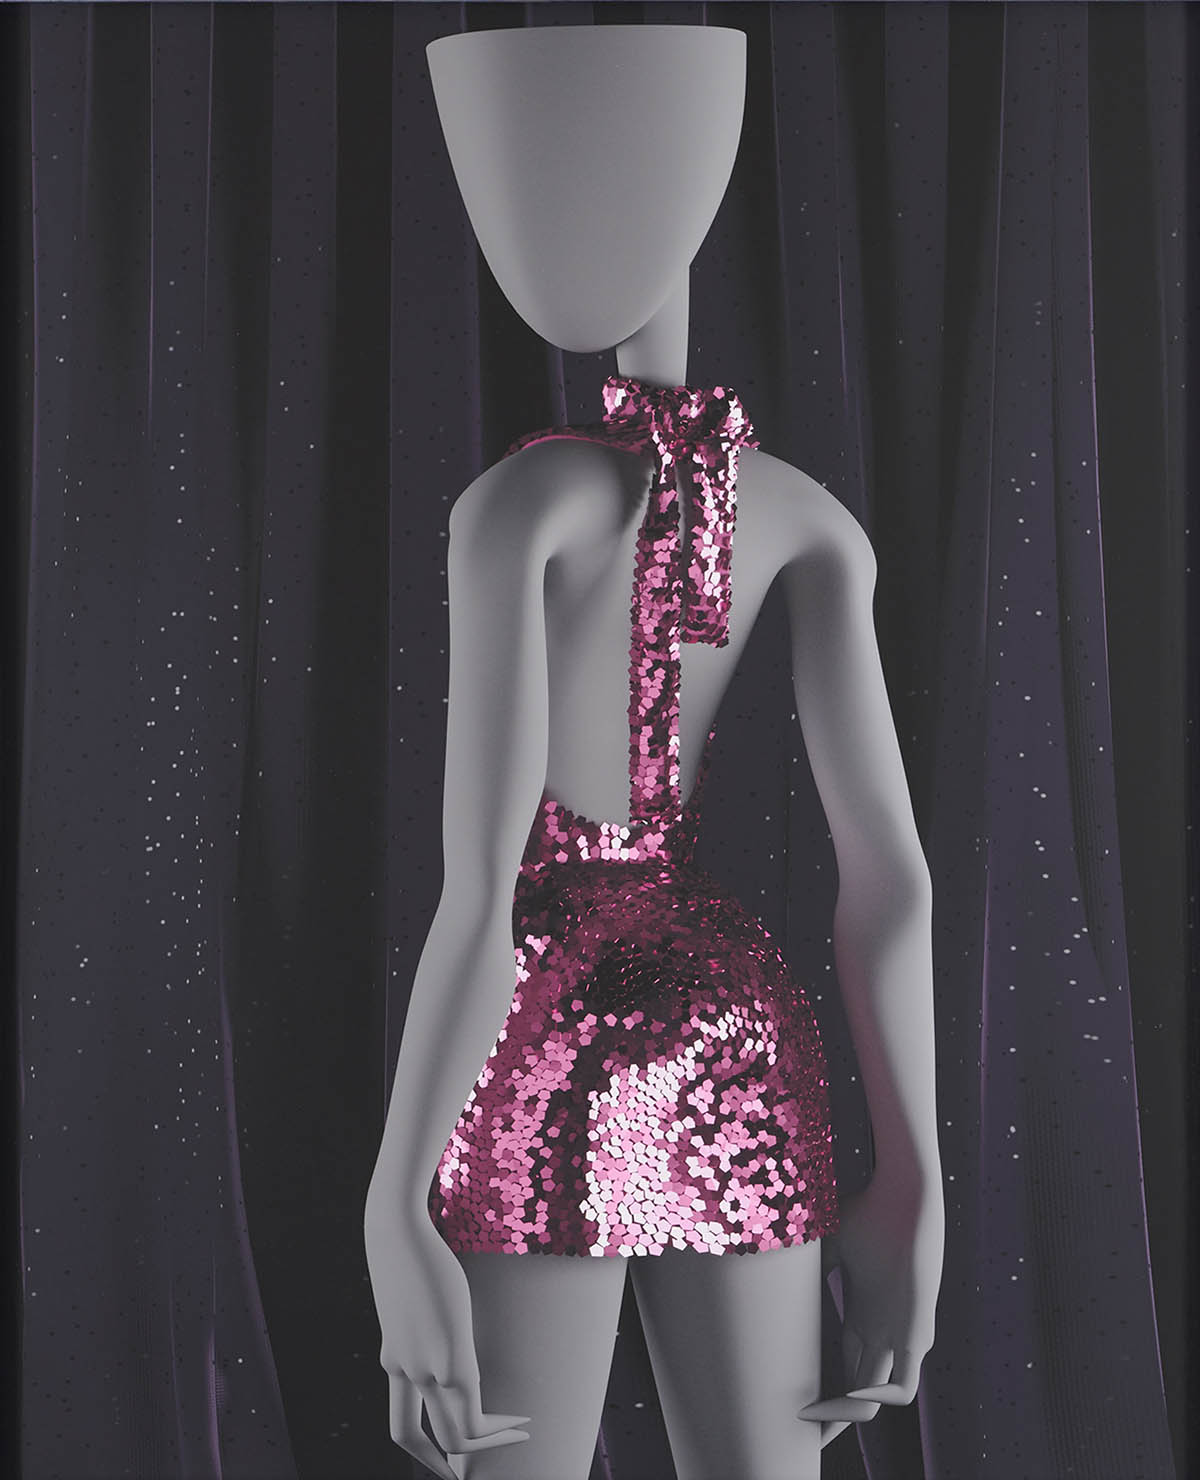 Bunny Rogers, Tom Ford sequin dress I (stand I), 2020Fine Art Print on Hahnemühle PhotoRag Ultrasmooth 305 g, silver plated artistframe, black silver142,3 x 117,5 x 4,5 cm (56,02 x 46,26 x 1,77 in)(BUR 1005). Courtesy Galerie Thaddaeus Ropac, London · Paris · Salzburg · Seoul © Bunny Rogers, 2021.